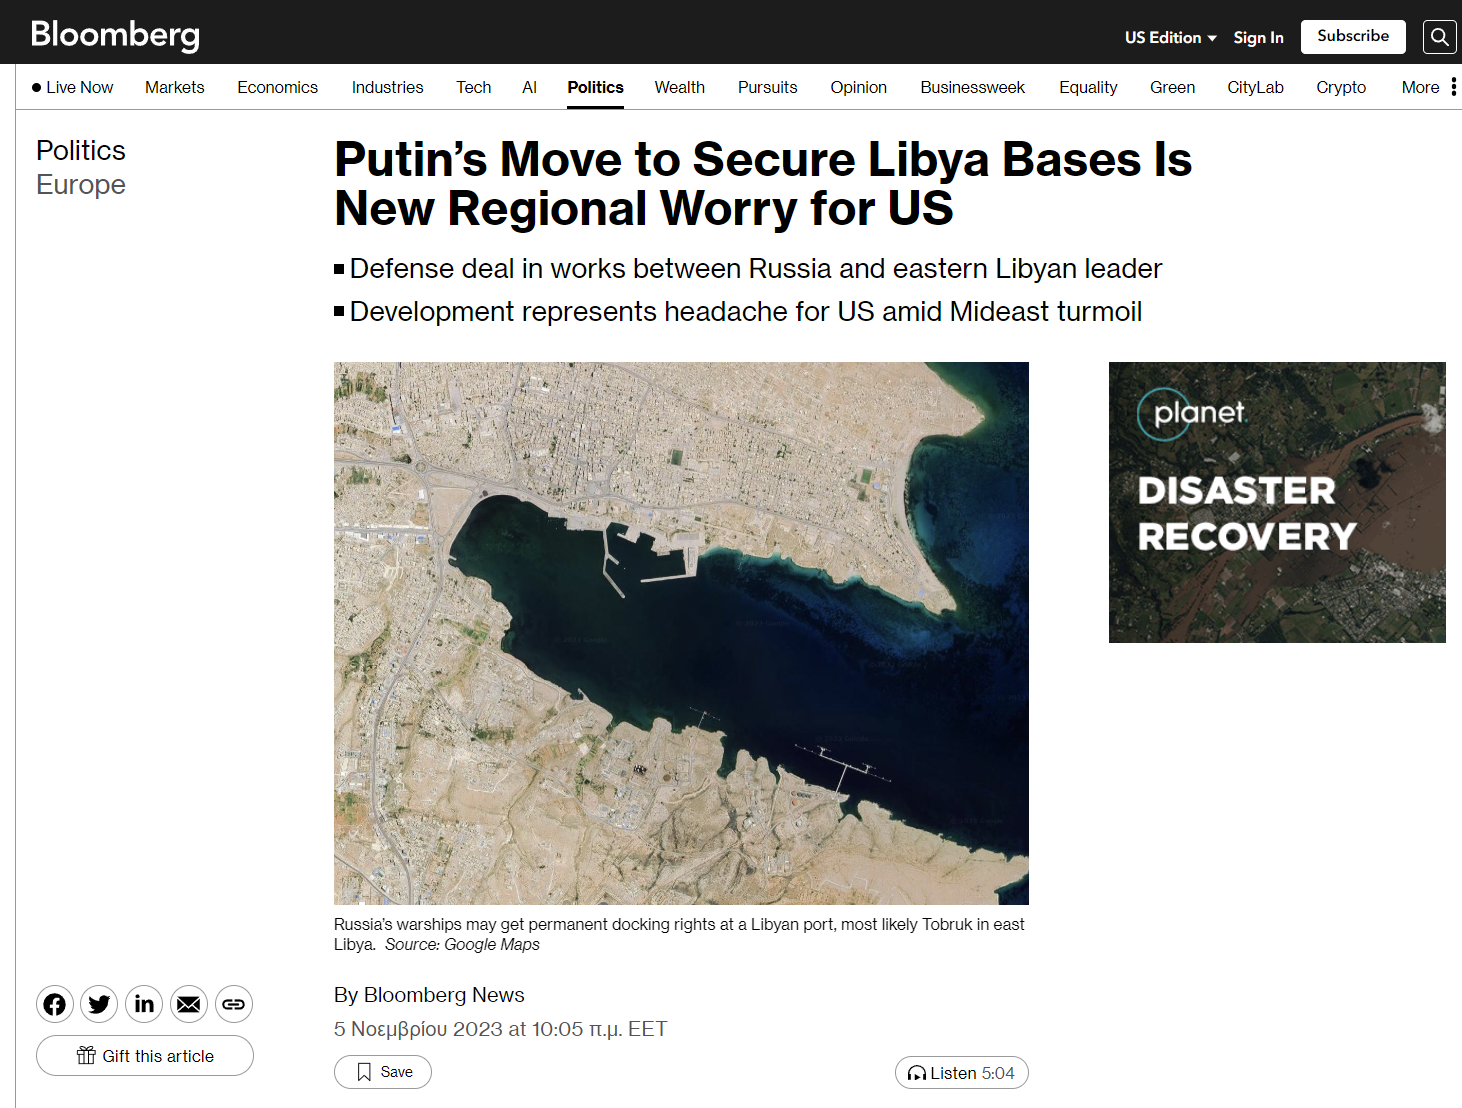 Bloomberg: Η μετακίνηση του Πούτιν σε ασφαλή βάση της Λιβύης είναι η νέα ανησυχία των ΗΠΑ στην περιοχή